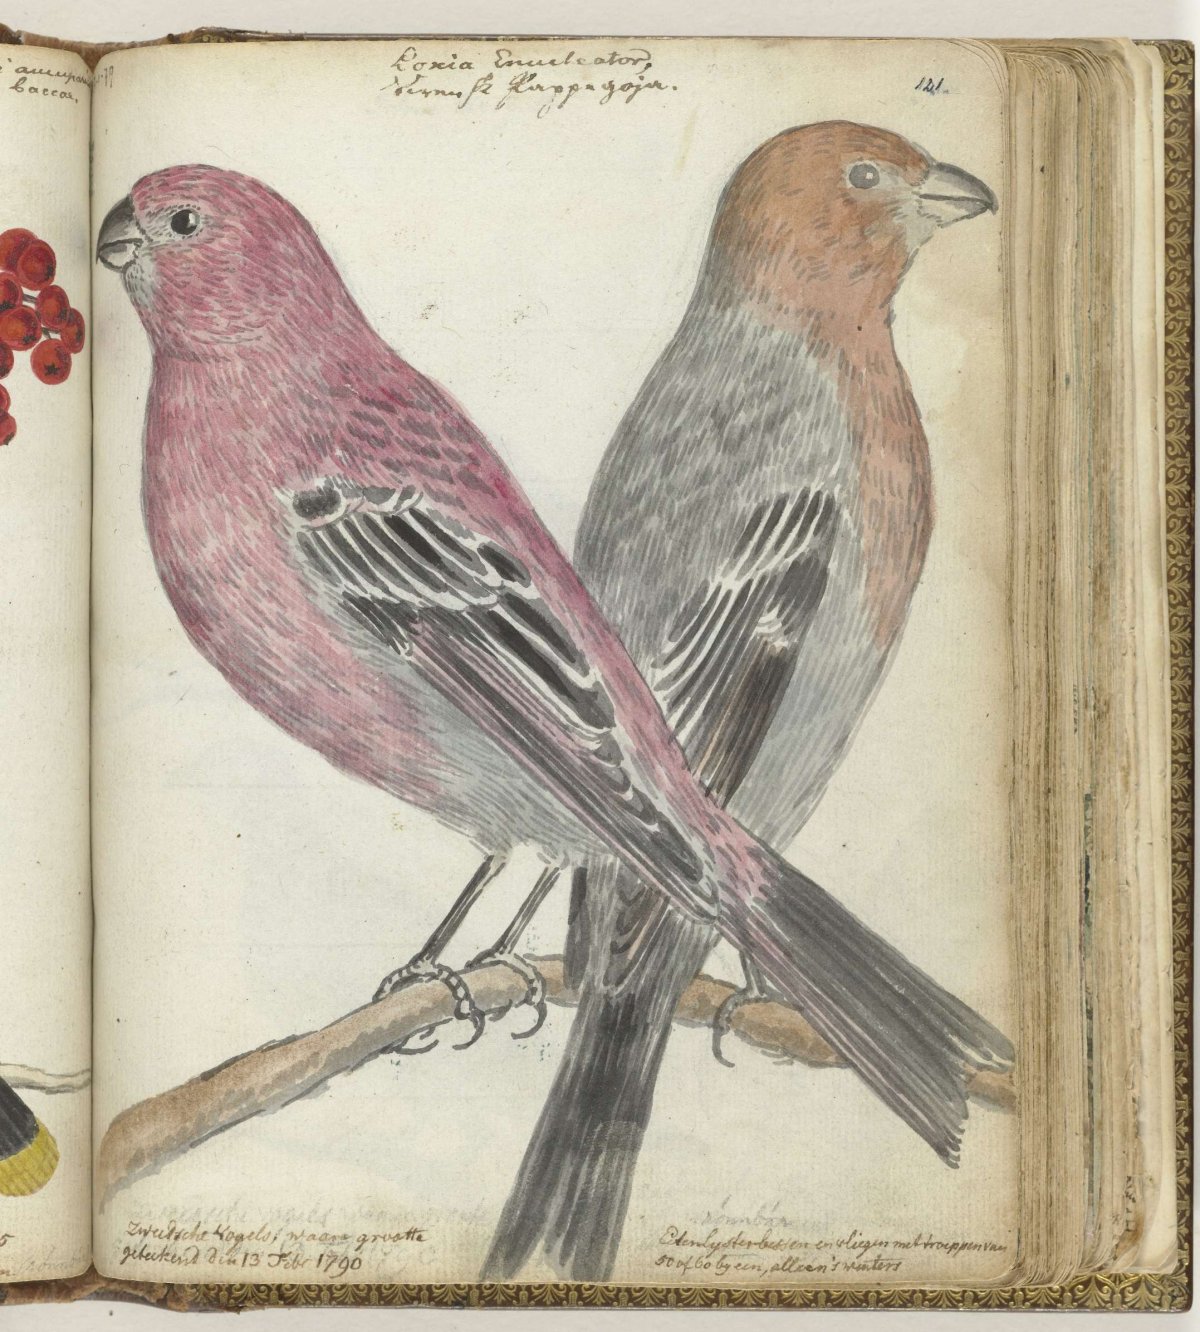 Zweedse vogels, Jan Brandes, 1790